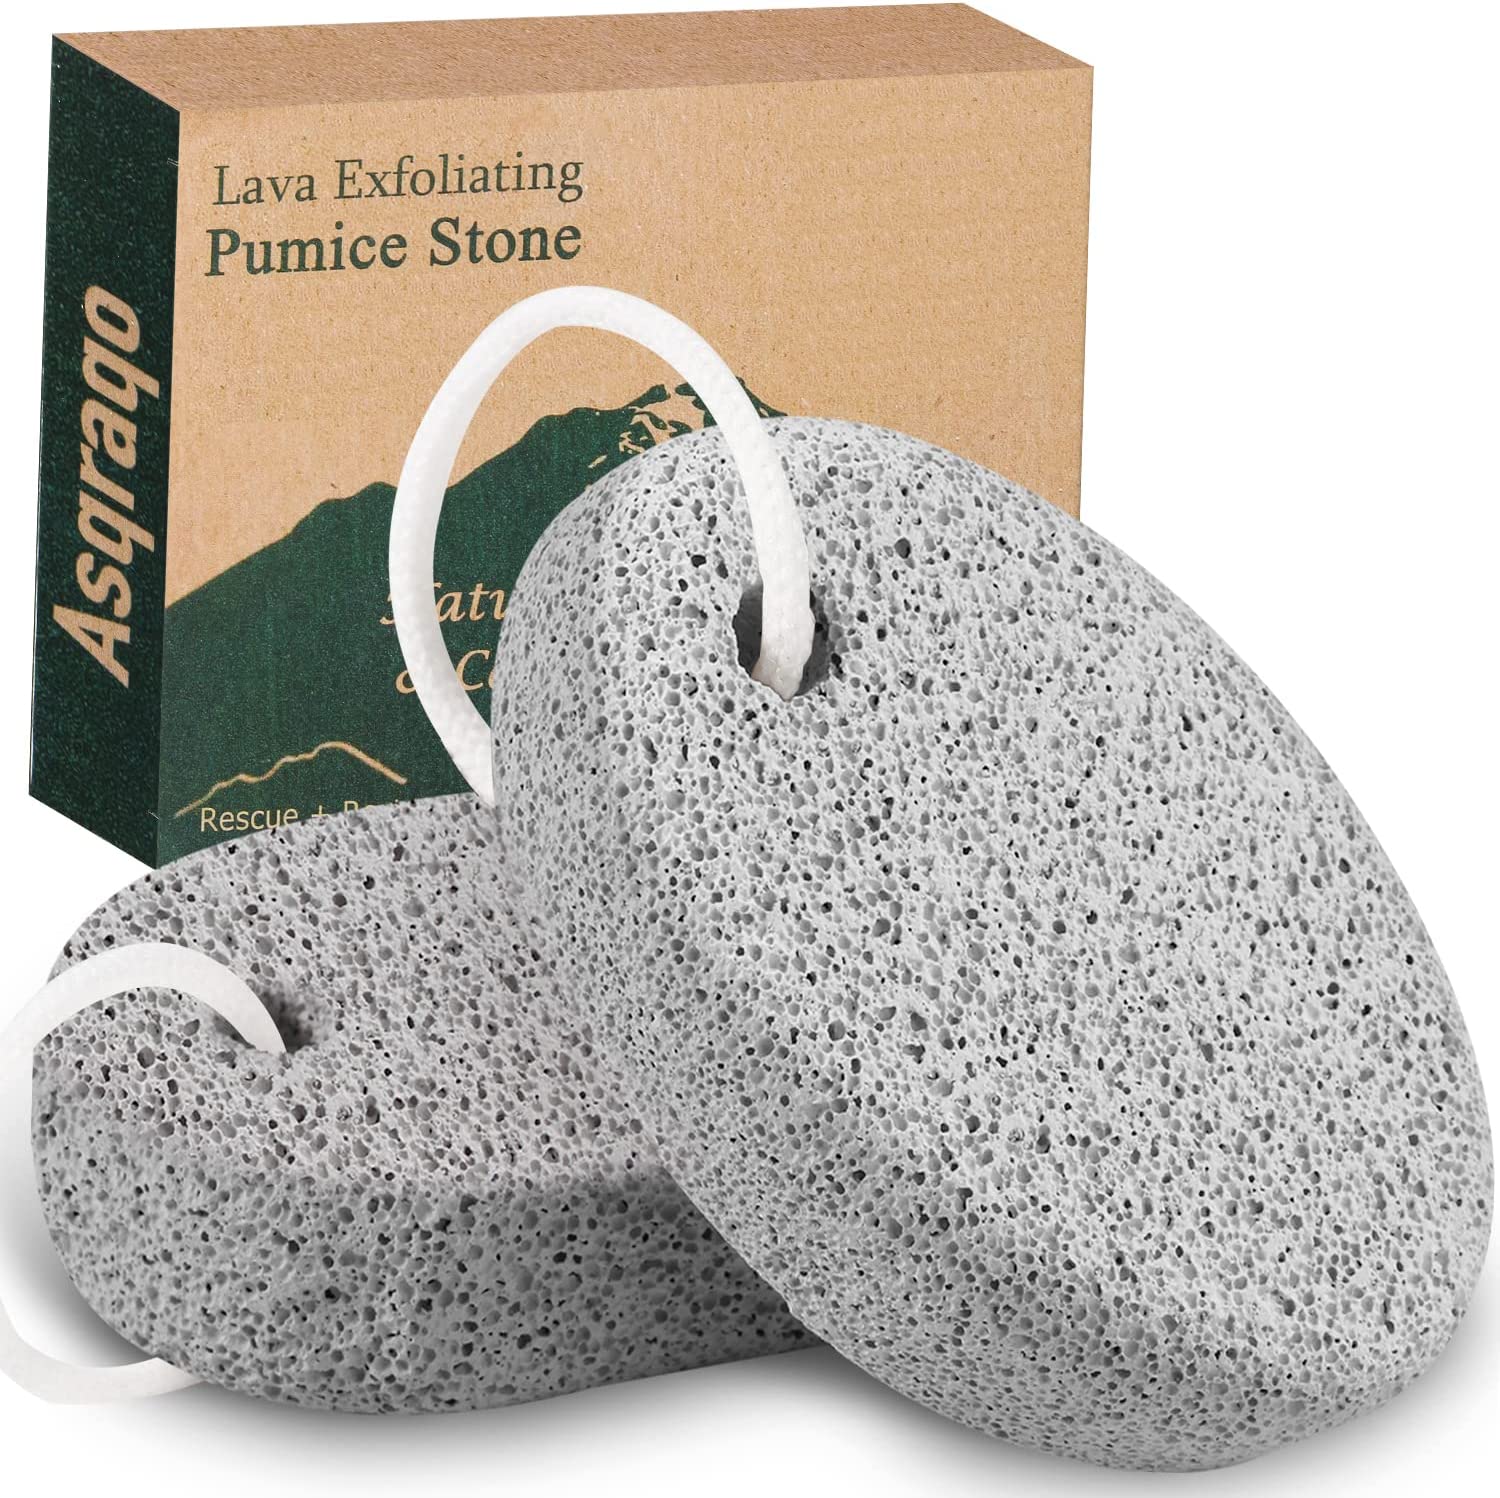 Asqraqo Ergonomic Natural Stone Foot Pumice